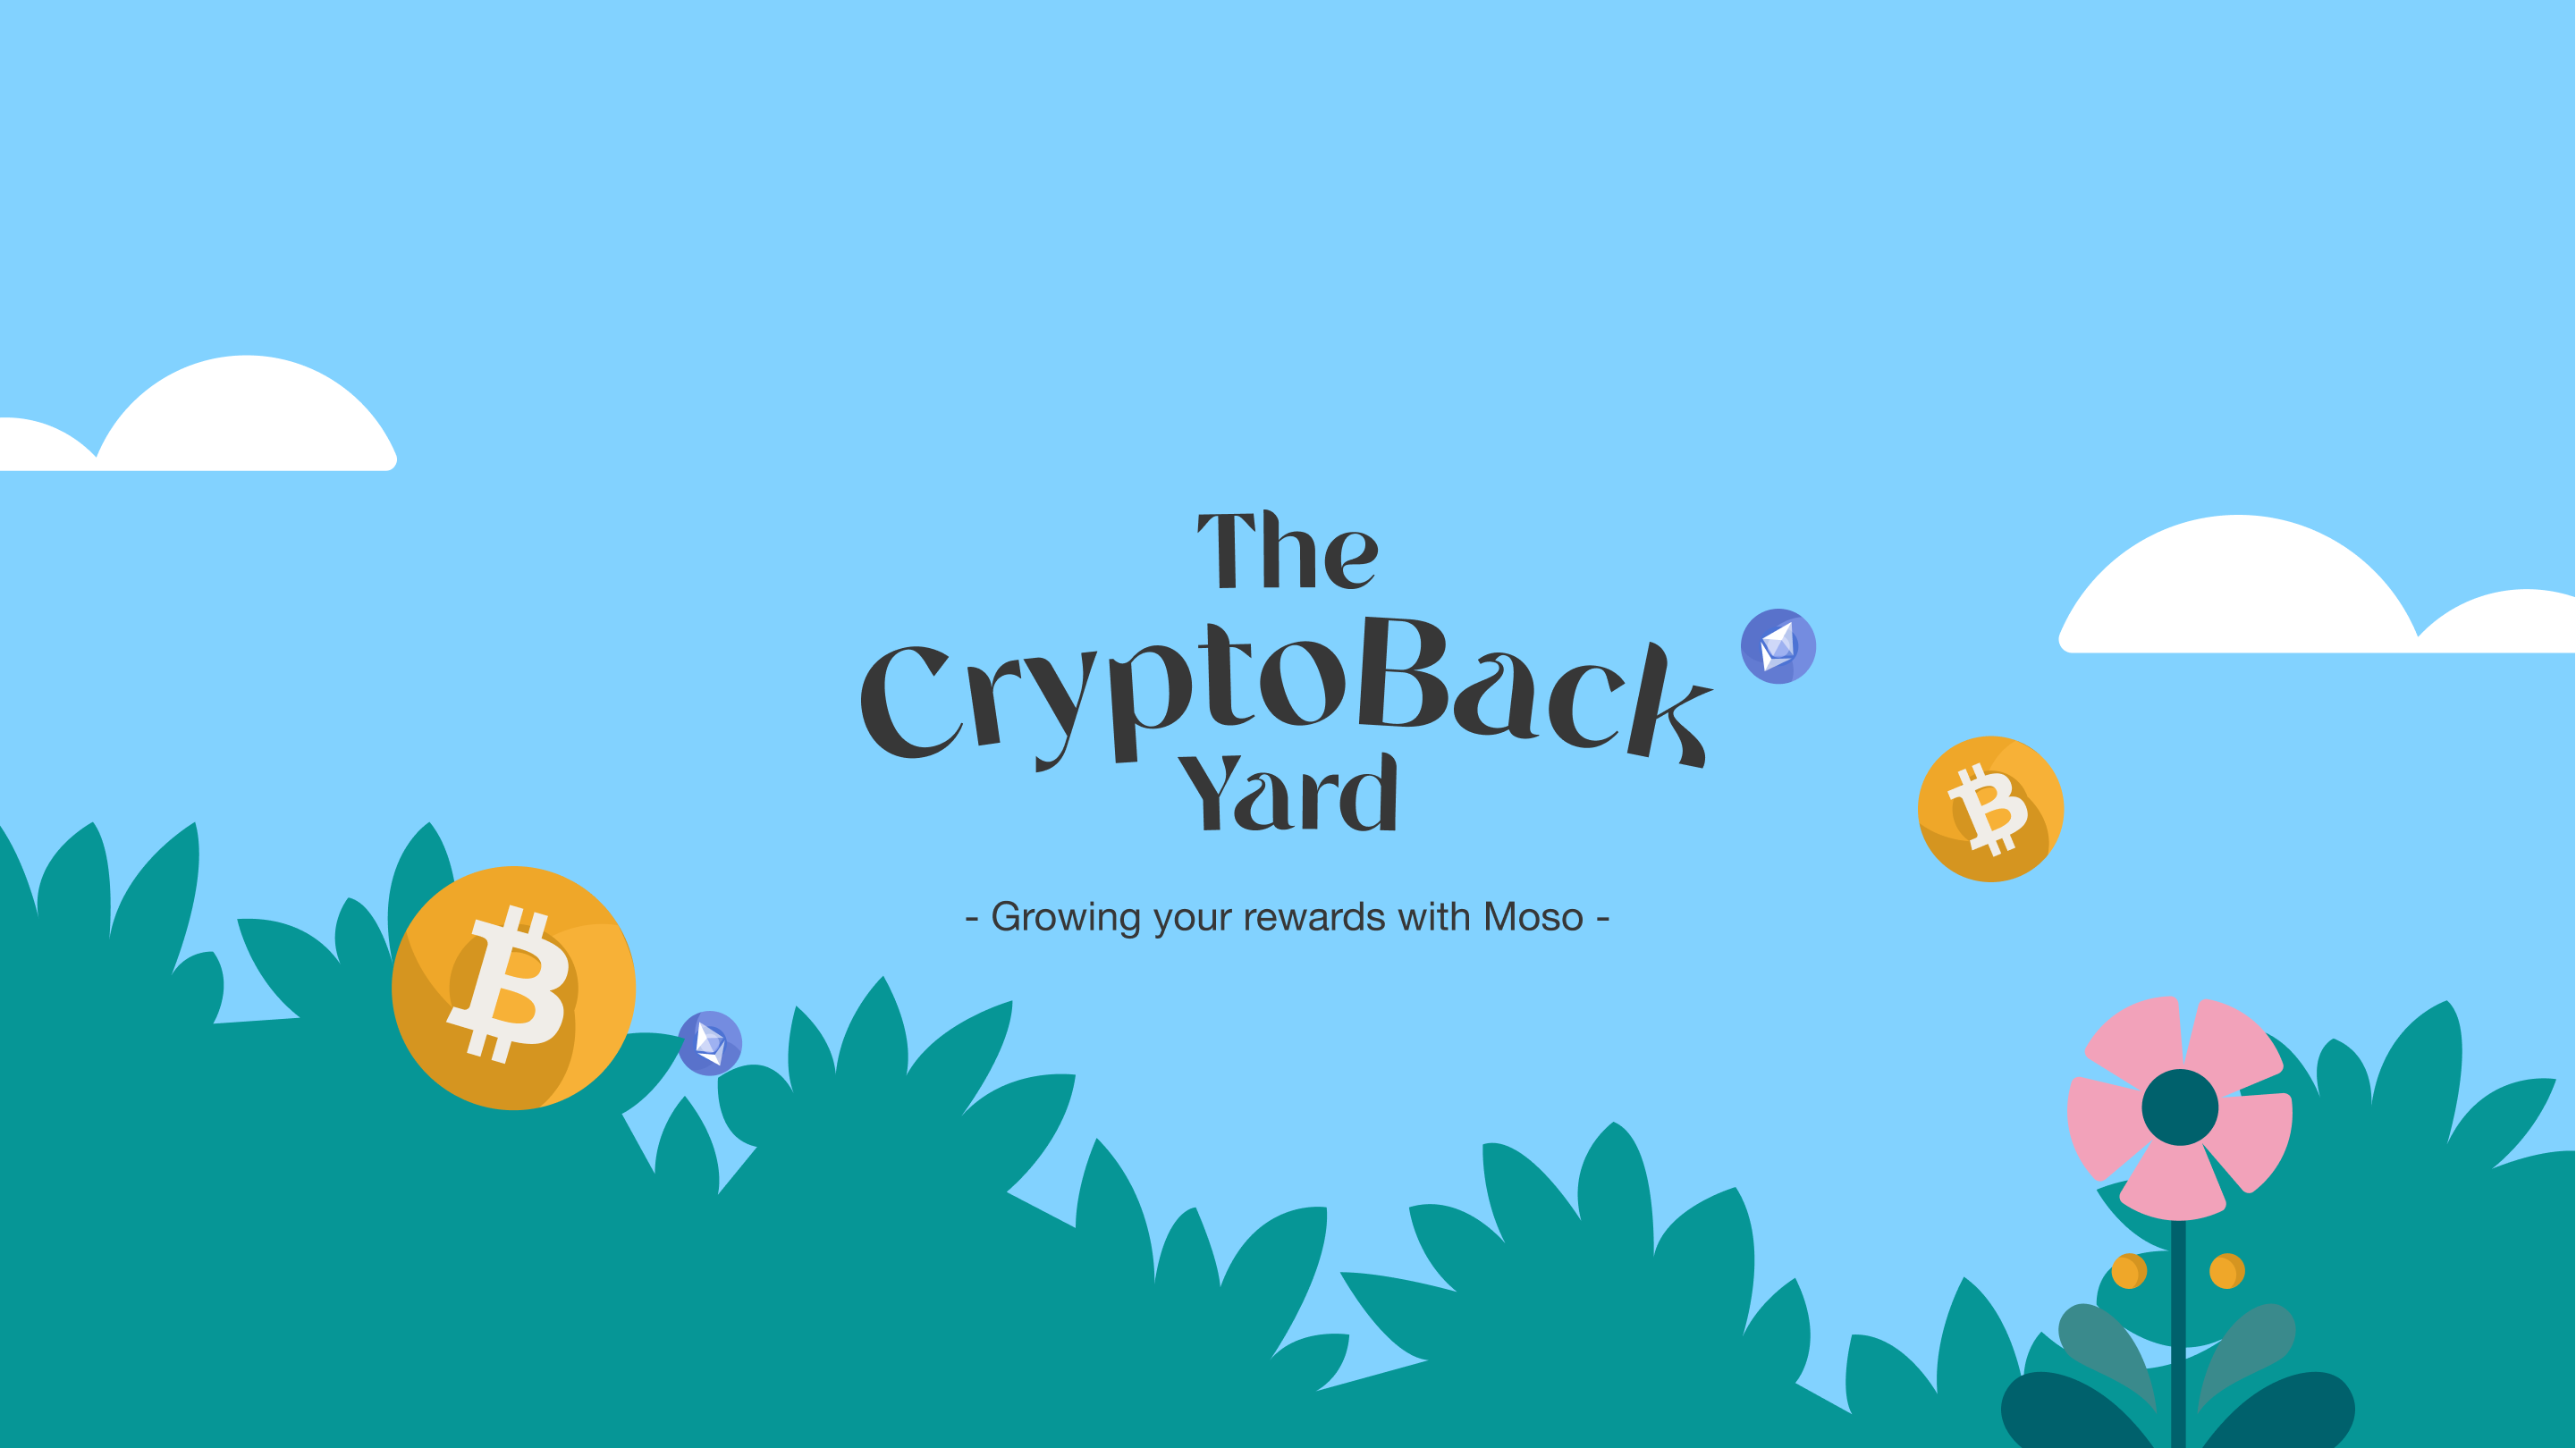 The CryptoBack Yard